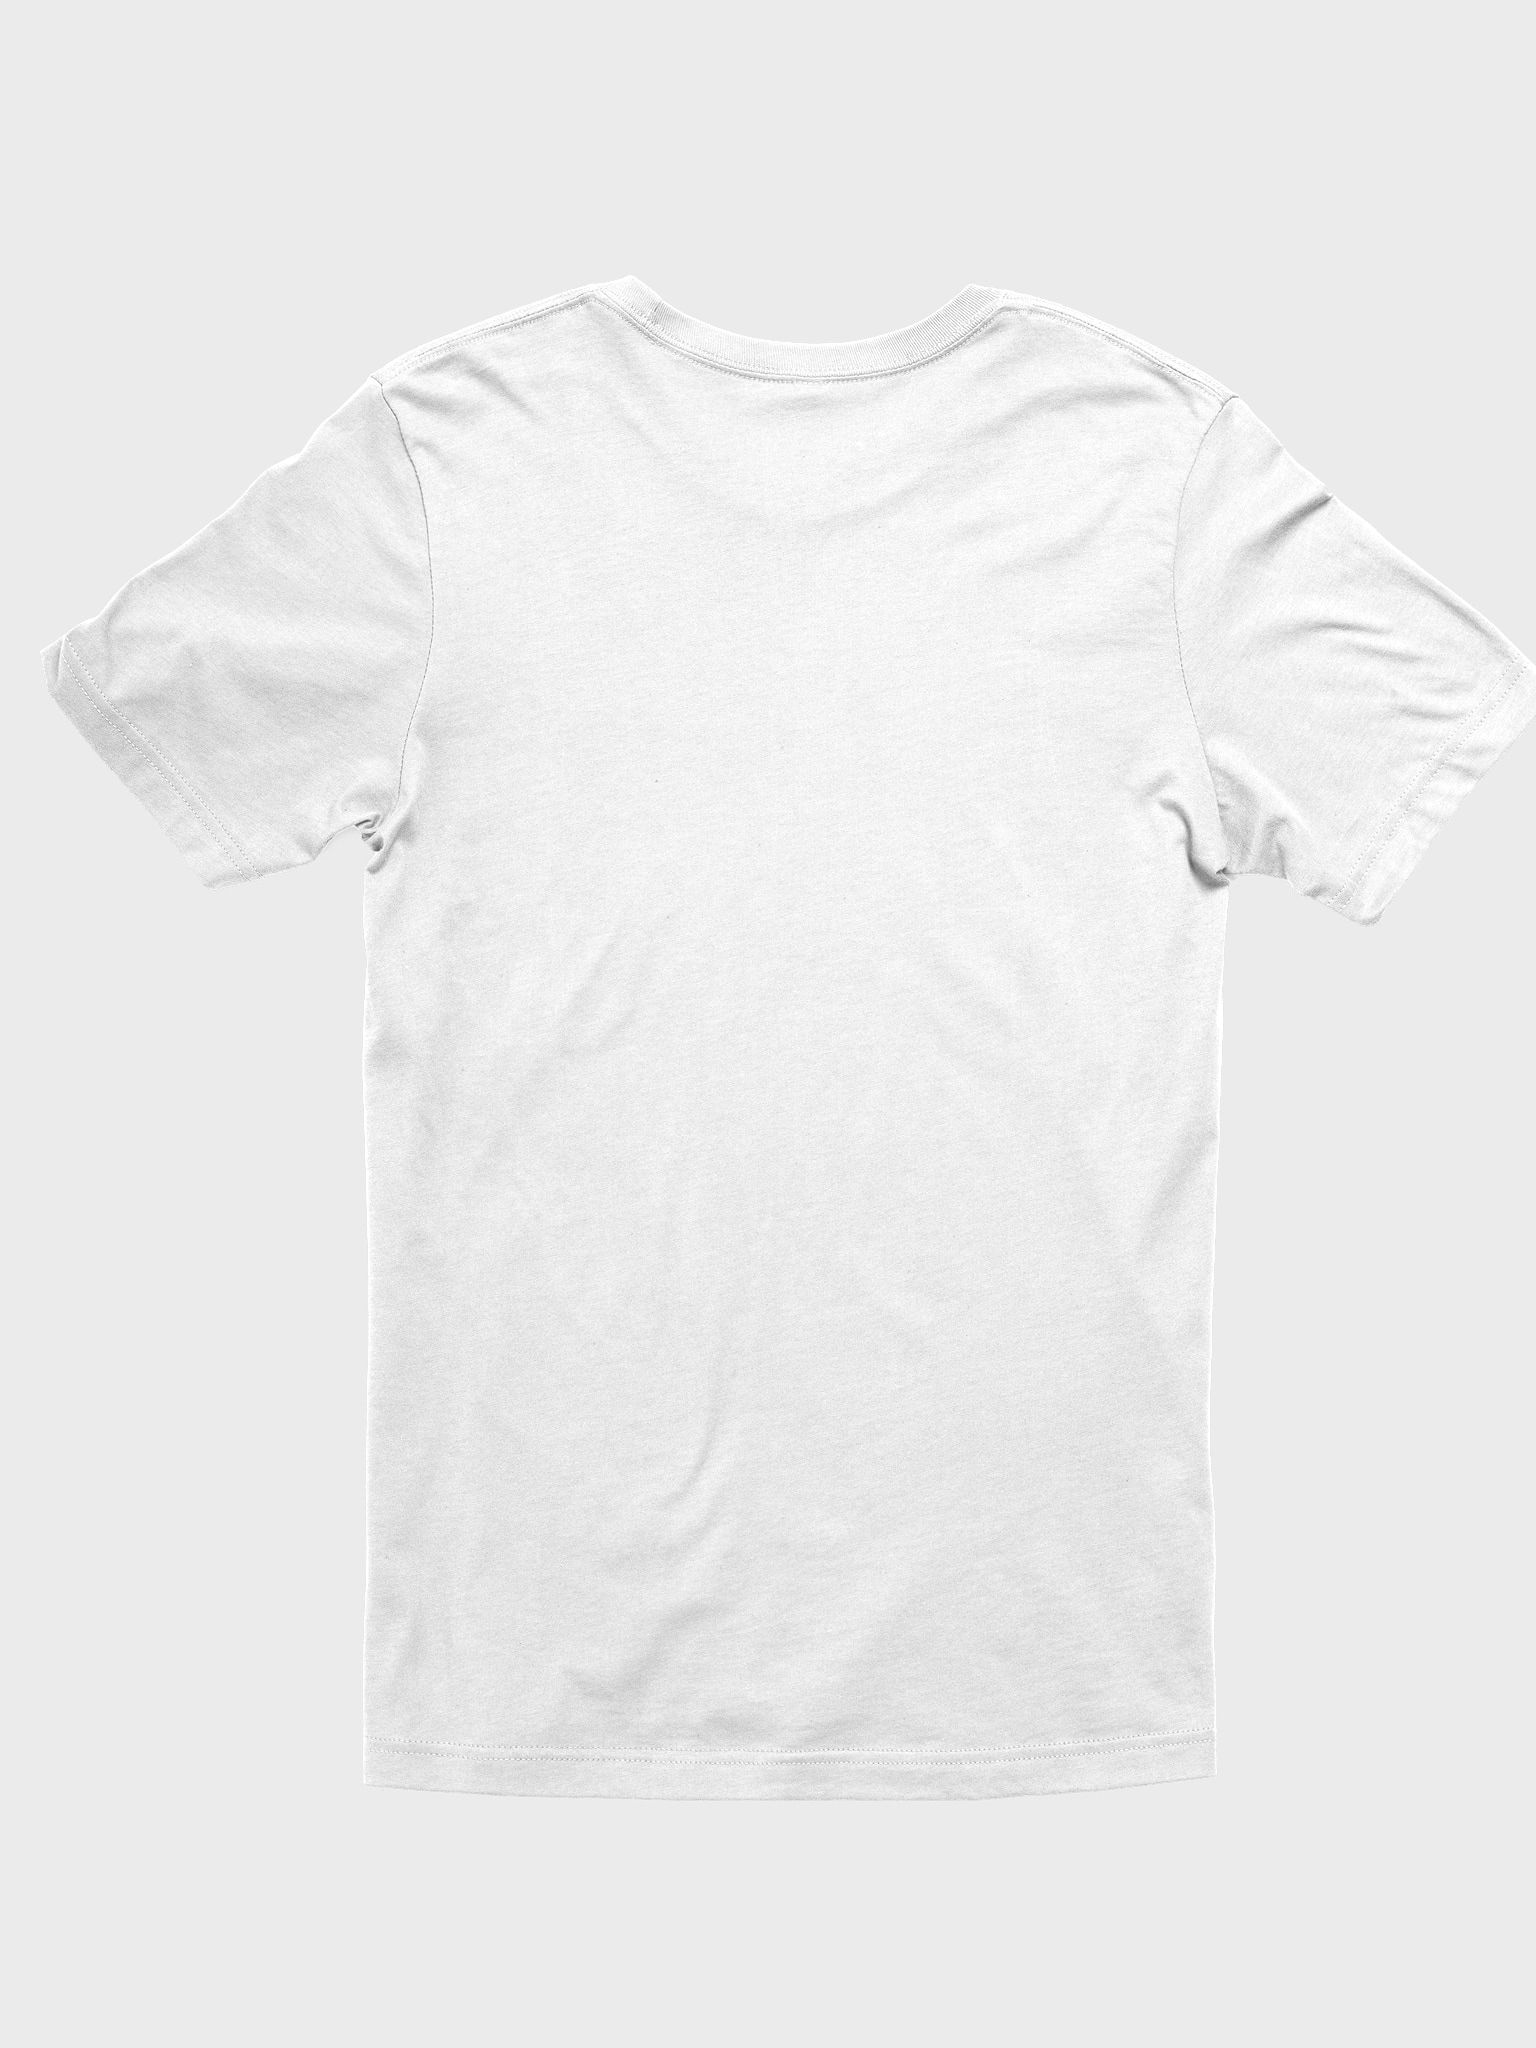 Anime4days T-shirt (white) | Anime4days | T-Shirts